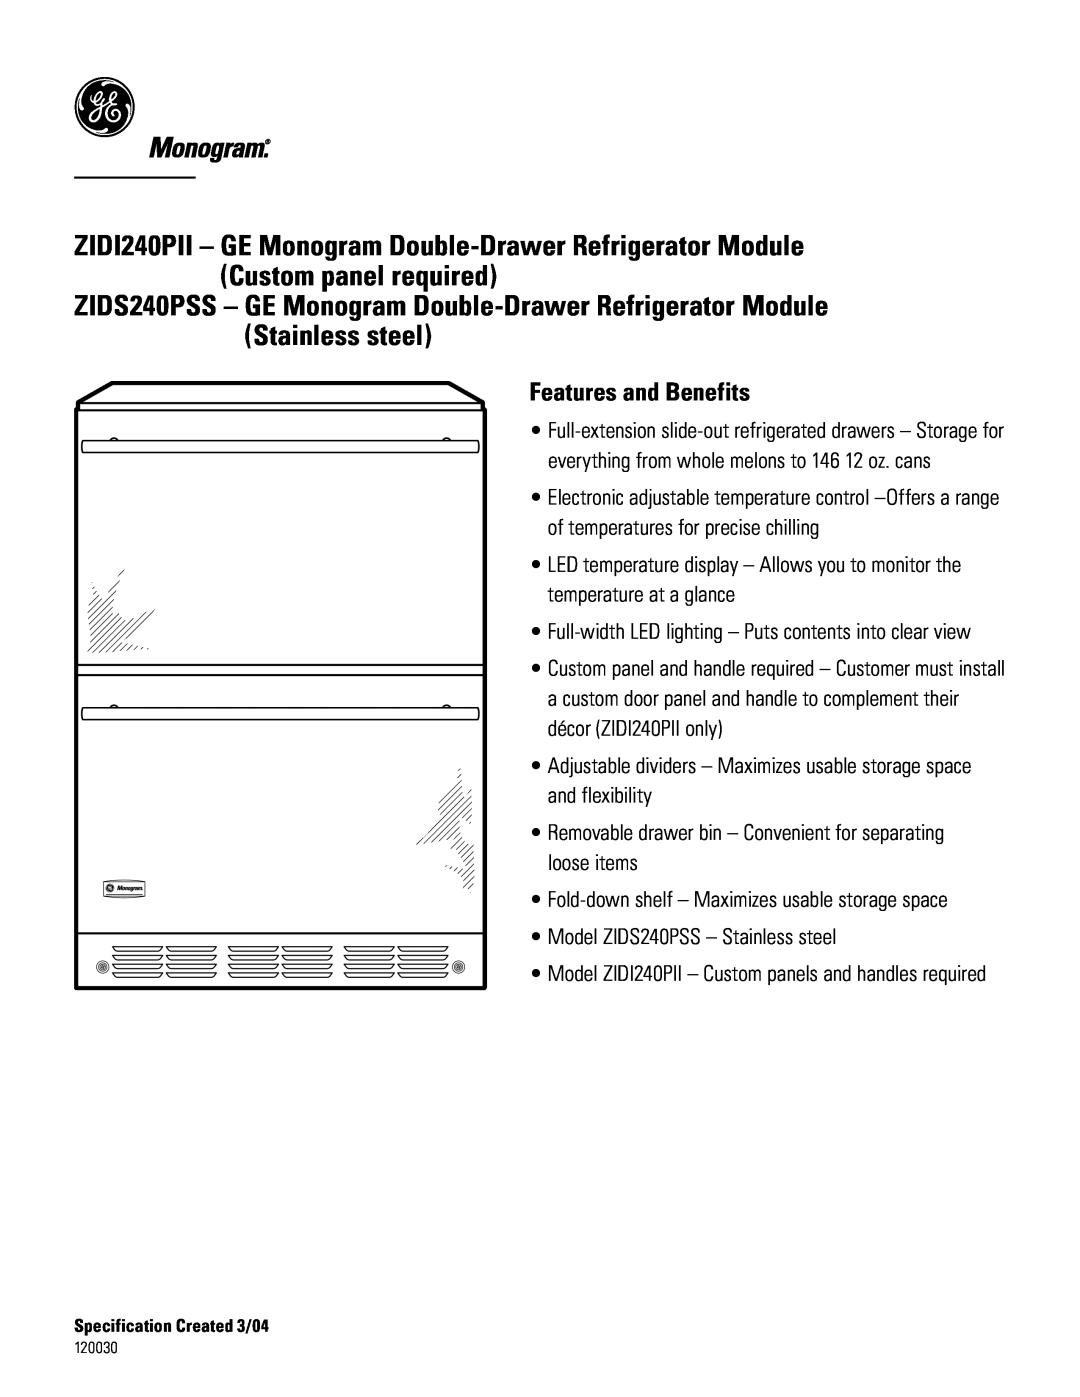 GE ZIDS240PSS dimensions ZIDI240PII - GE Monogram Double-Drawer Refrigerator Module, Custom panel required, Stainless steel 